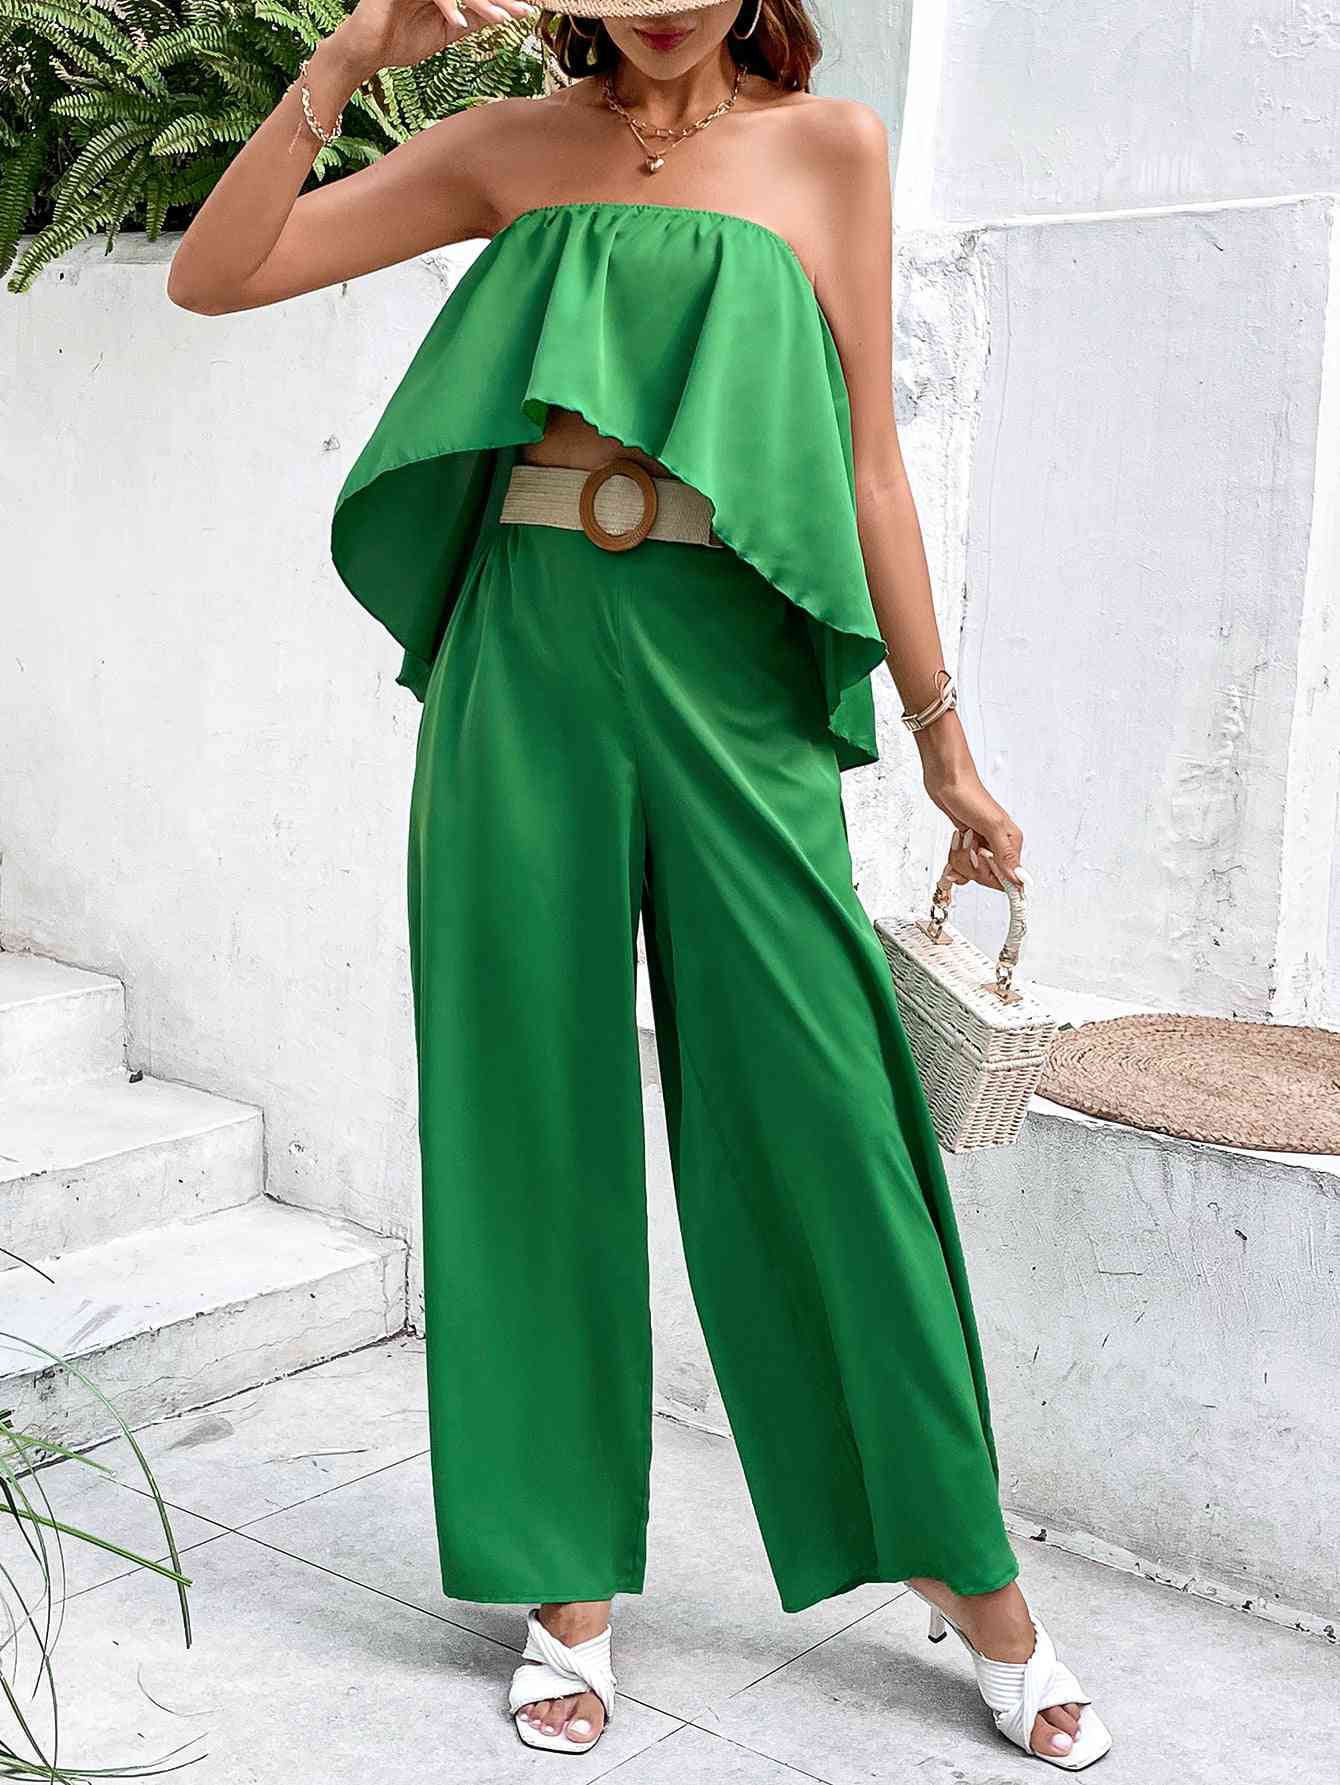 TEEK - Mid Green Strapless Top and Wide Leg Pants Set SET TEEK Trend   